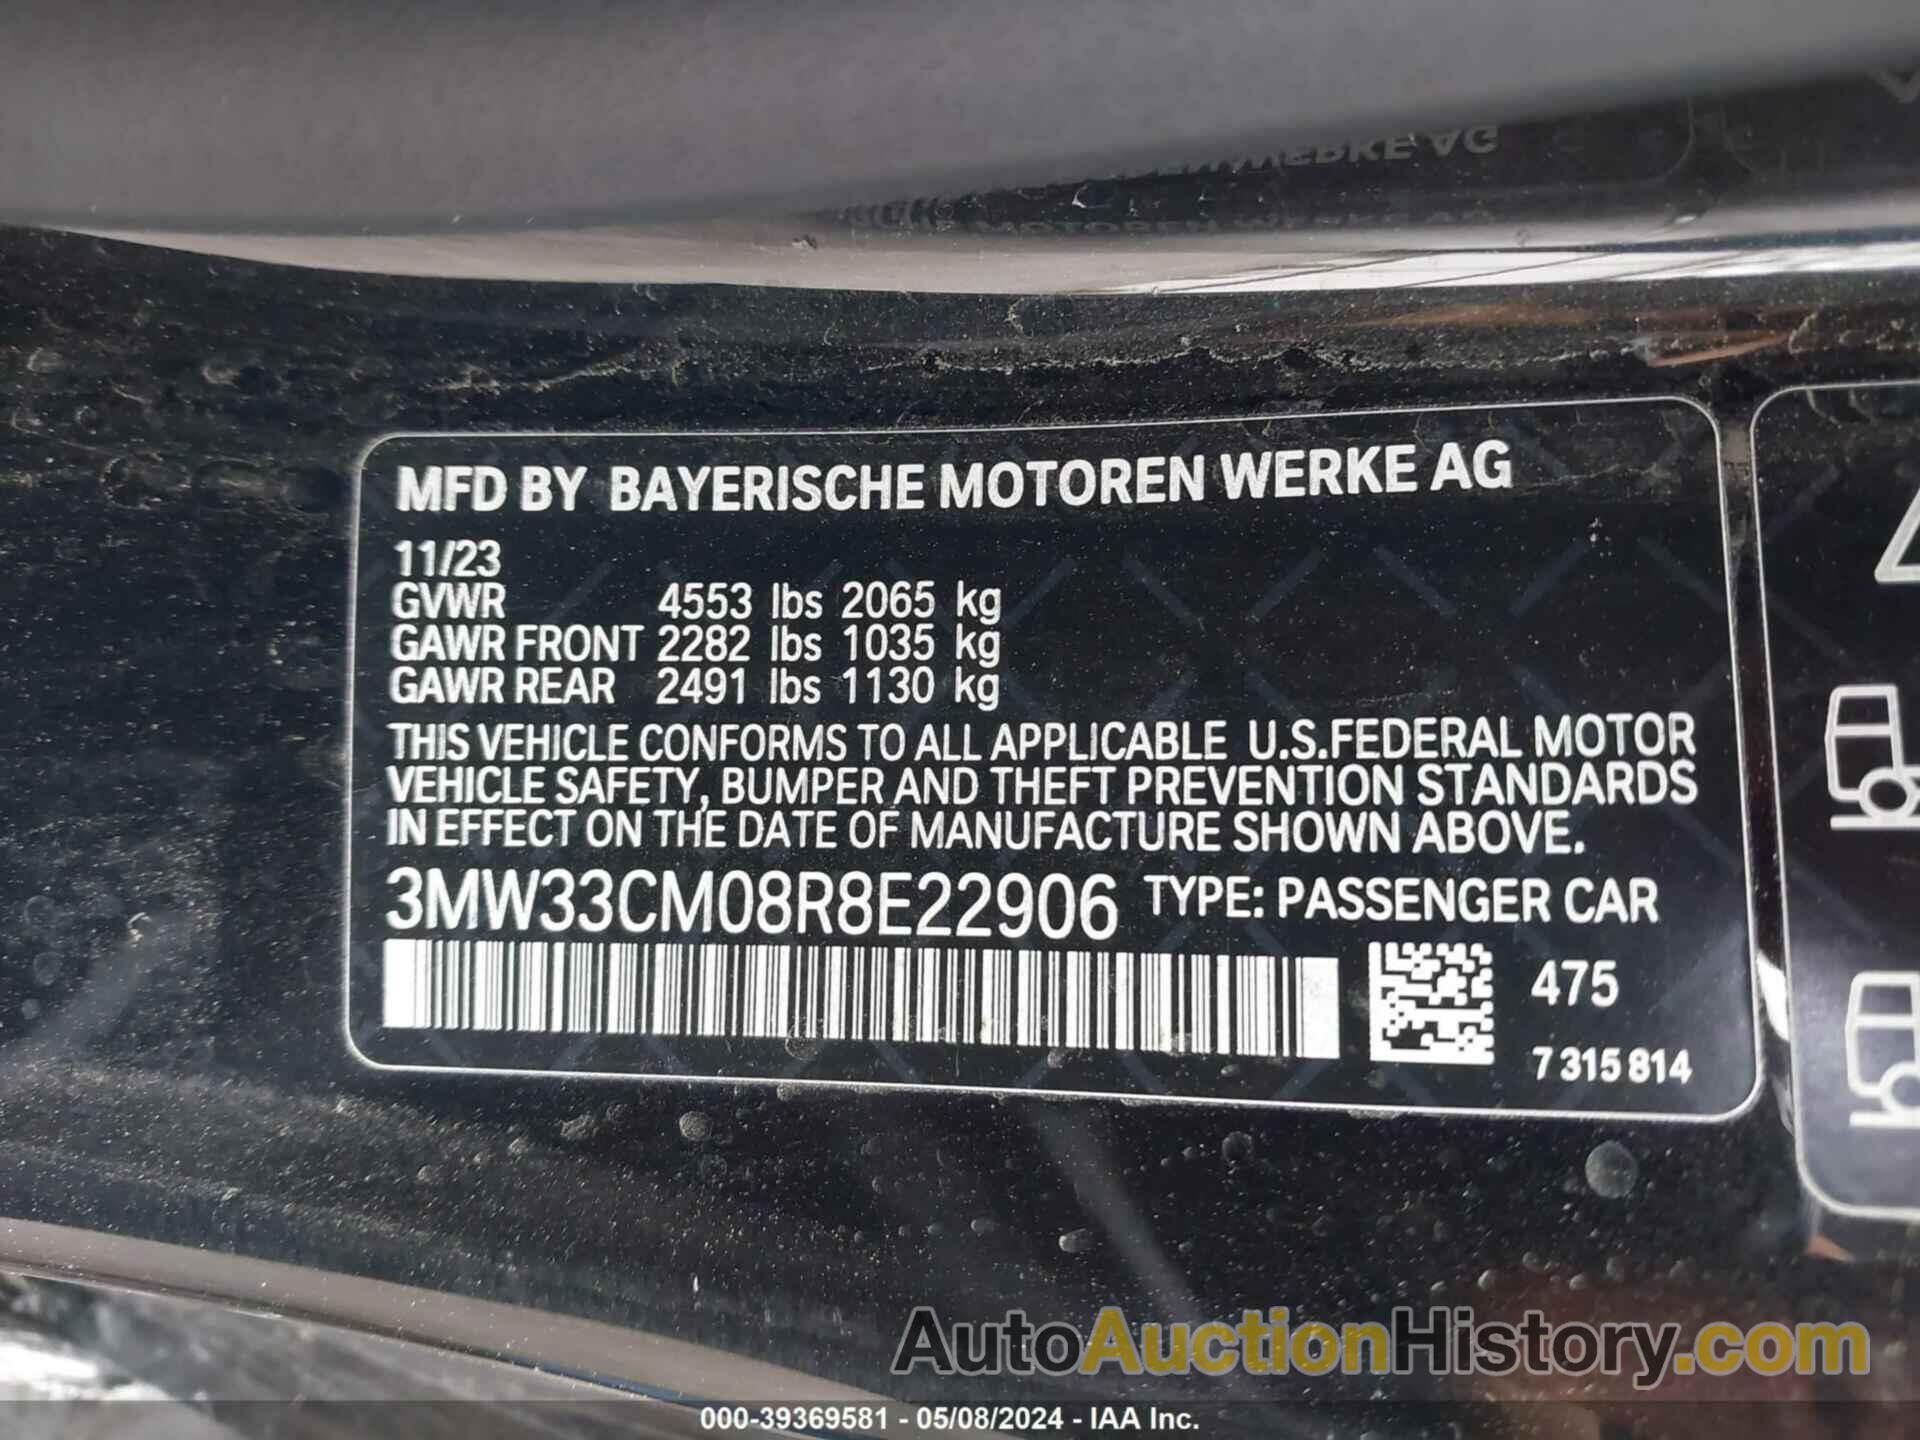 BMW 230XI, 3MW33CM08R8E22906